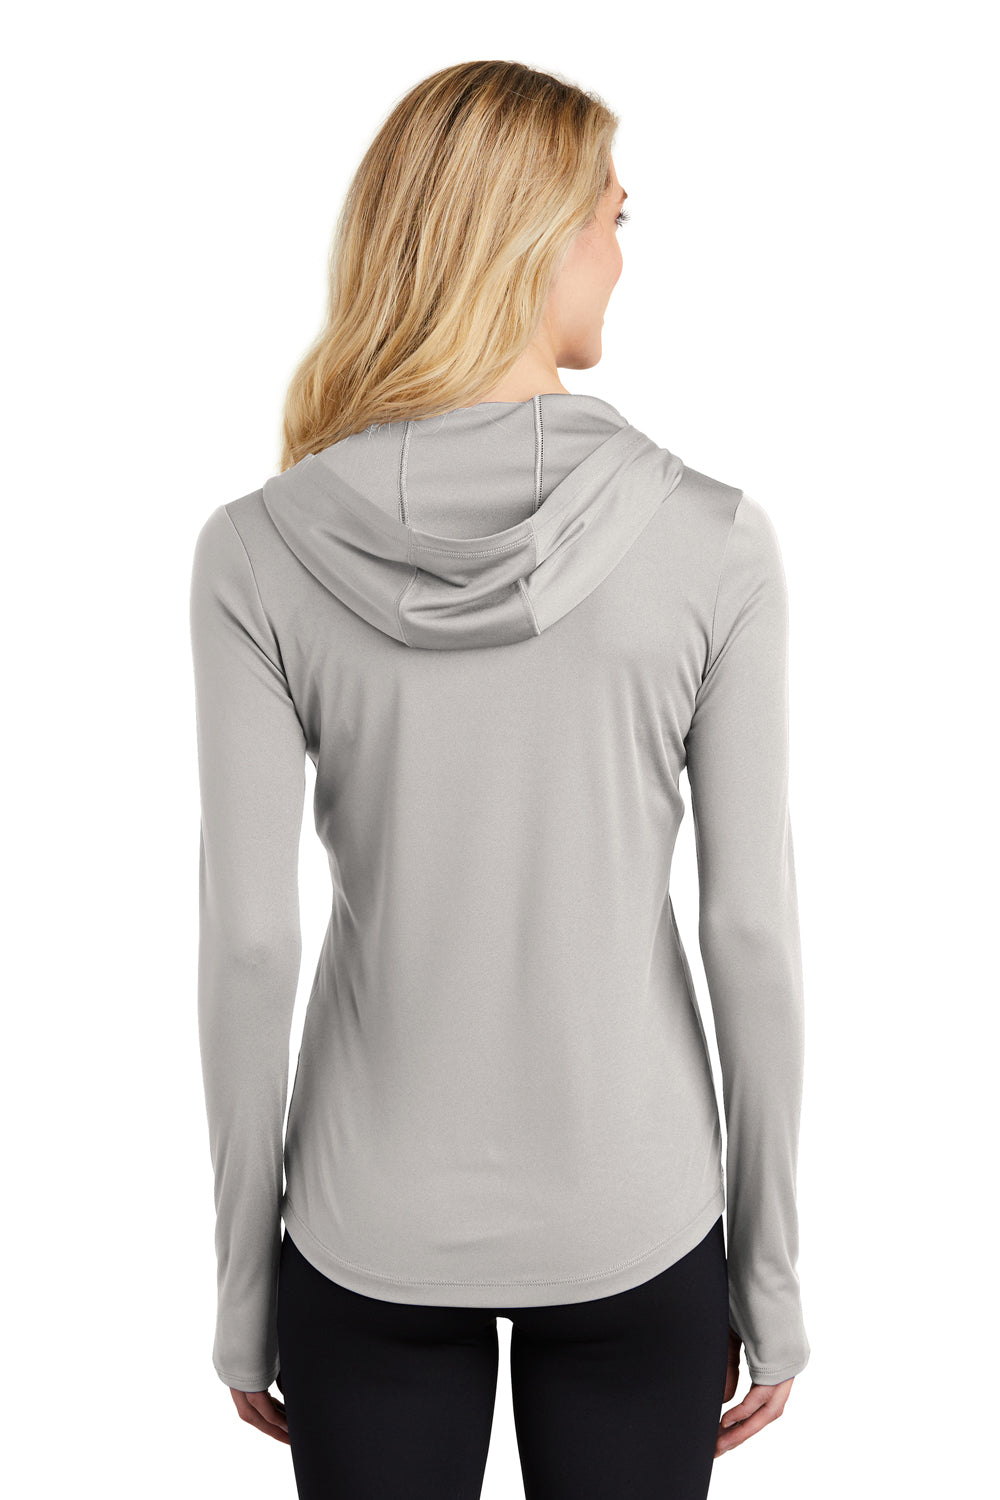 Sport-Tek LST358 Womens Competitor Moisture Wicking Long Sleeve Hooded T-Shirt Hoodie Silver Grey Back